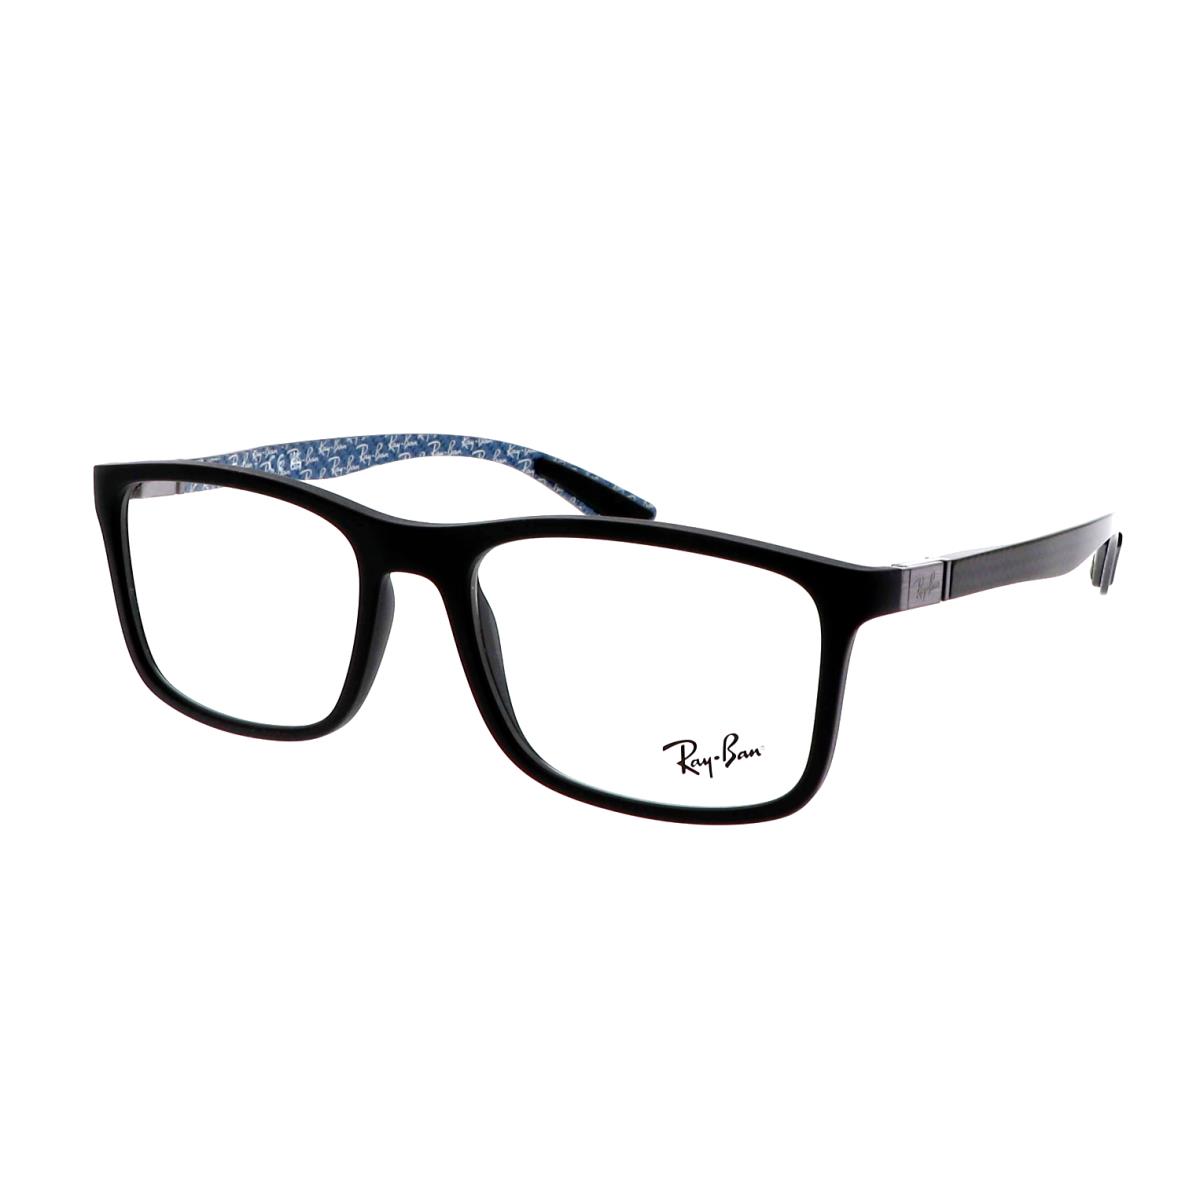 Ray-ban Eyeglasses Tech Series RB 8908 5196 53-18 Black Carbon Fiber Frames - Matte Black Frame, Demos with Logo imprint Lens